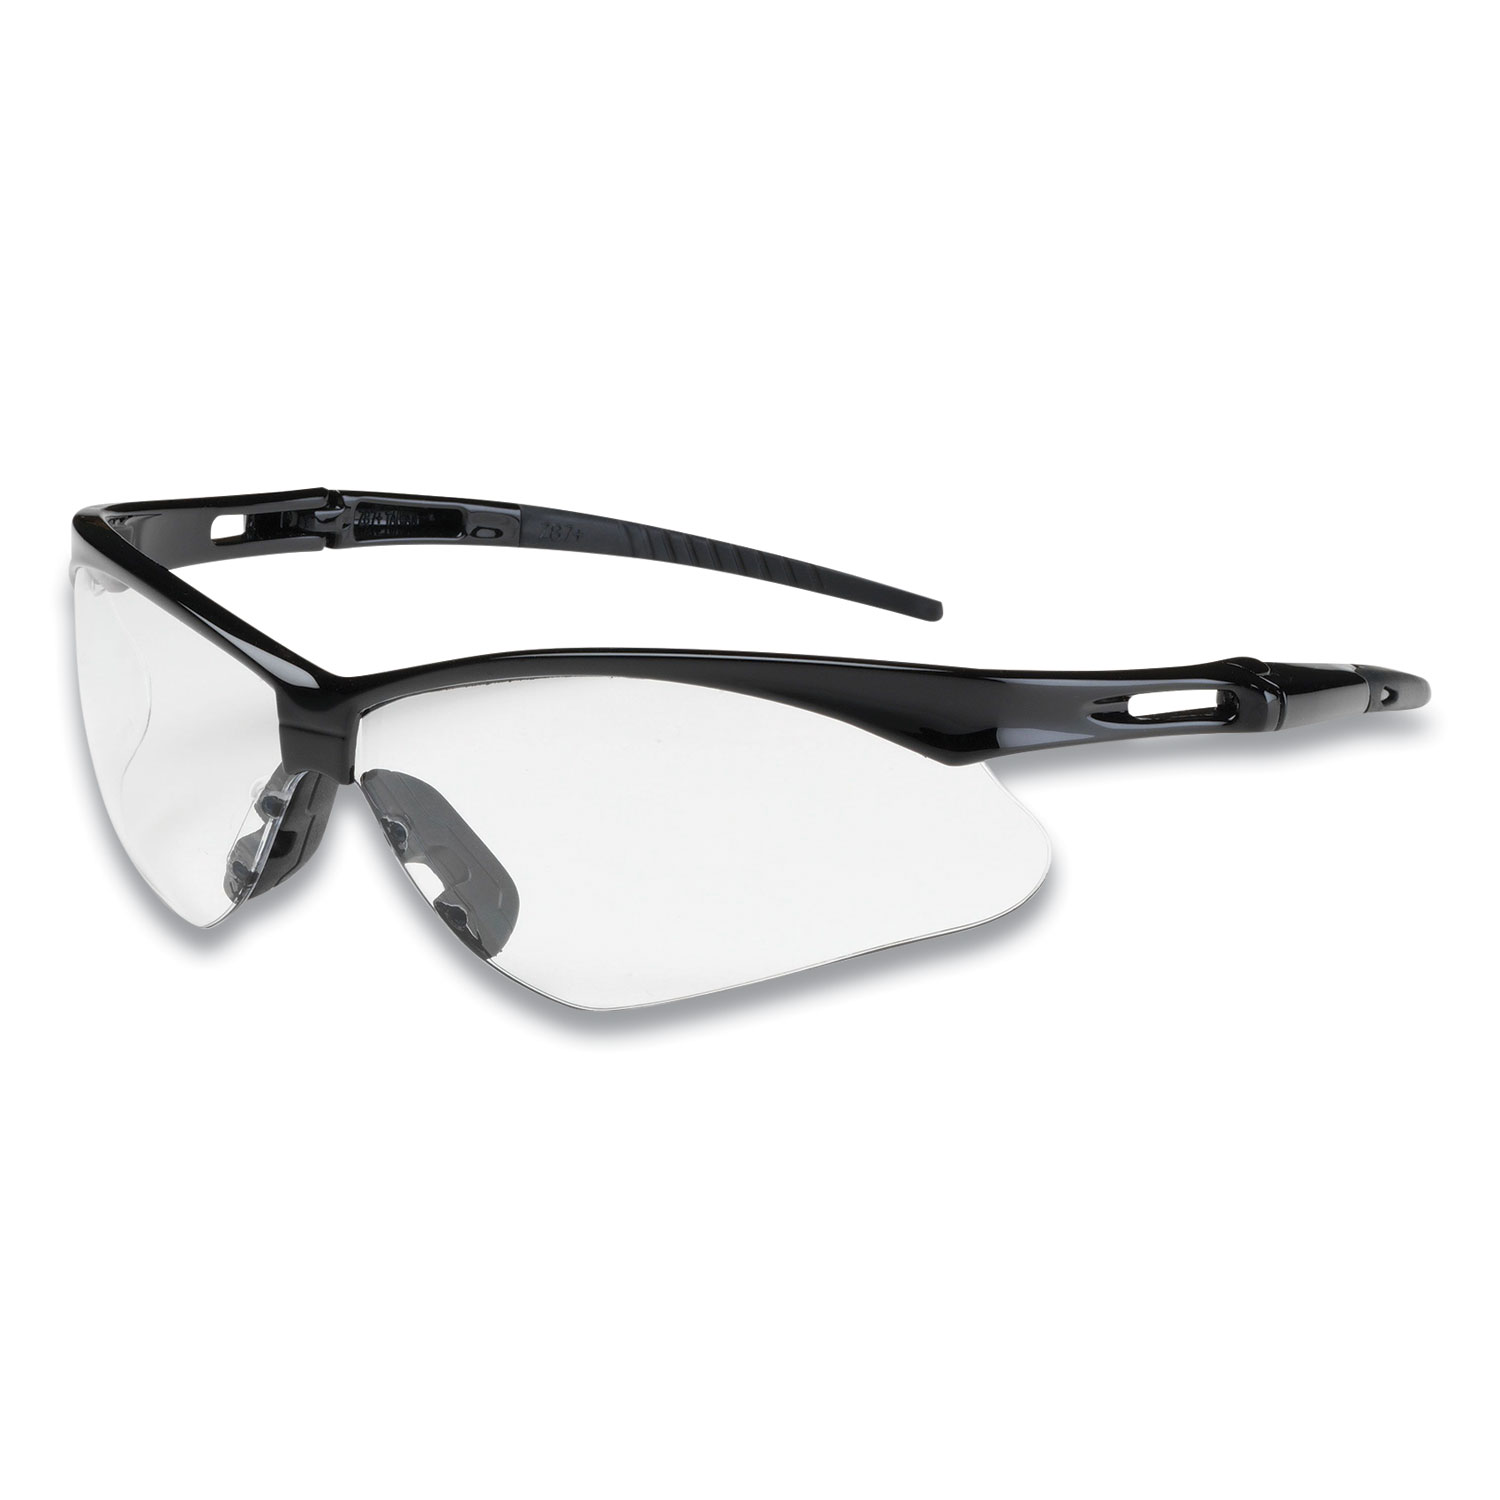 Bouton® Anser Optical Safety Glasses, Anti-Fog, Anti-Scratch, Clear Lens, Black Frame